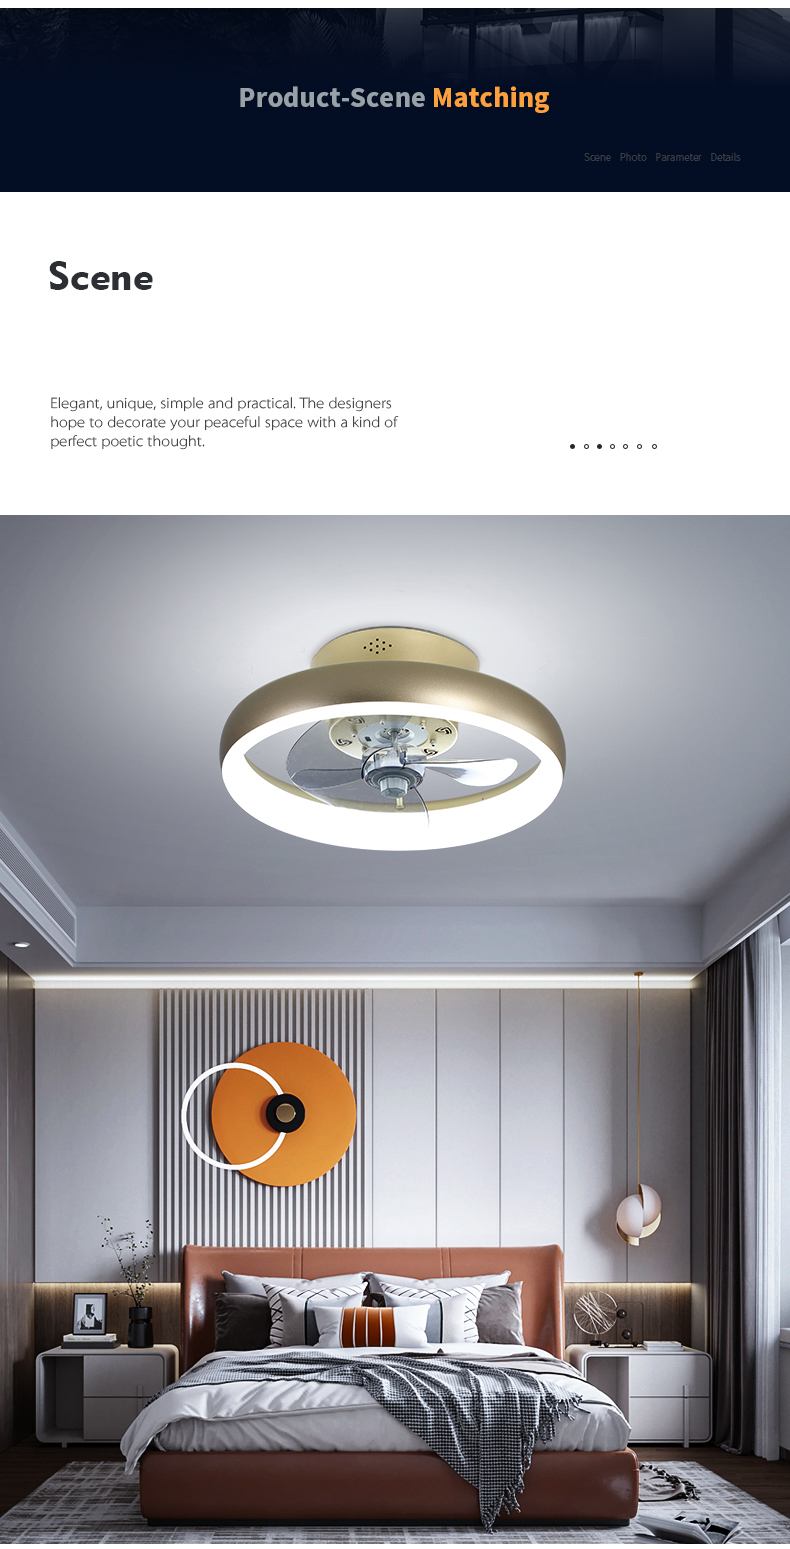 AC-220V-Modern-Minimalist-LED-Ceiling-Fan-Light-Crystal-Decorative-Remote-Control-Lighting-Bedroom-F-1885274-3